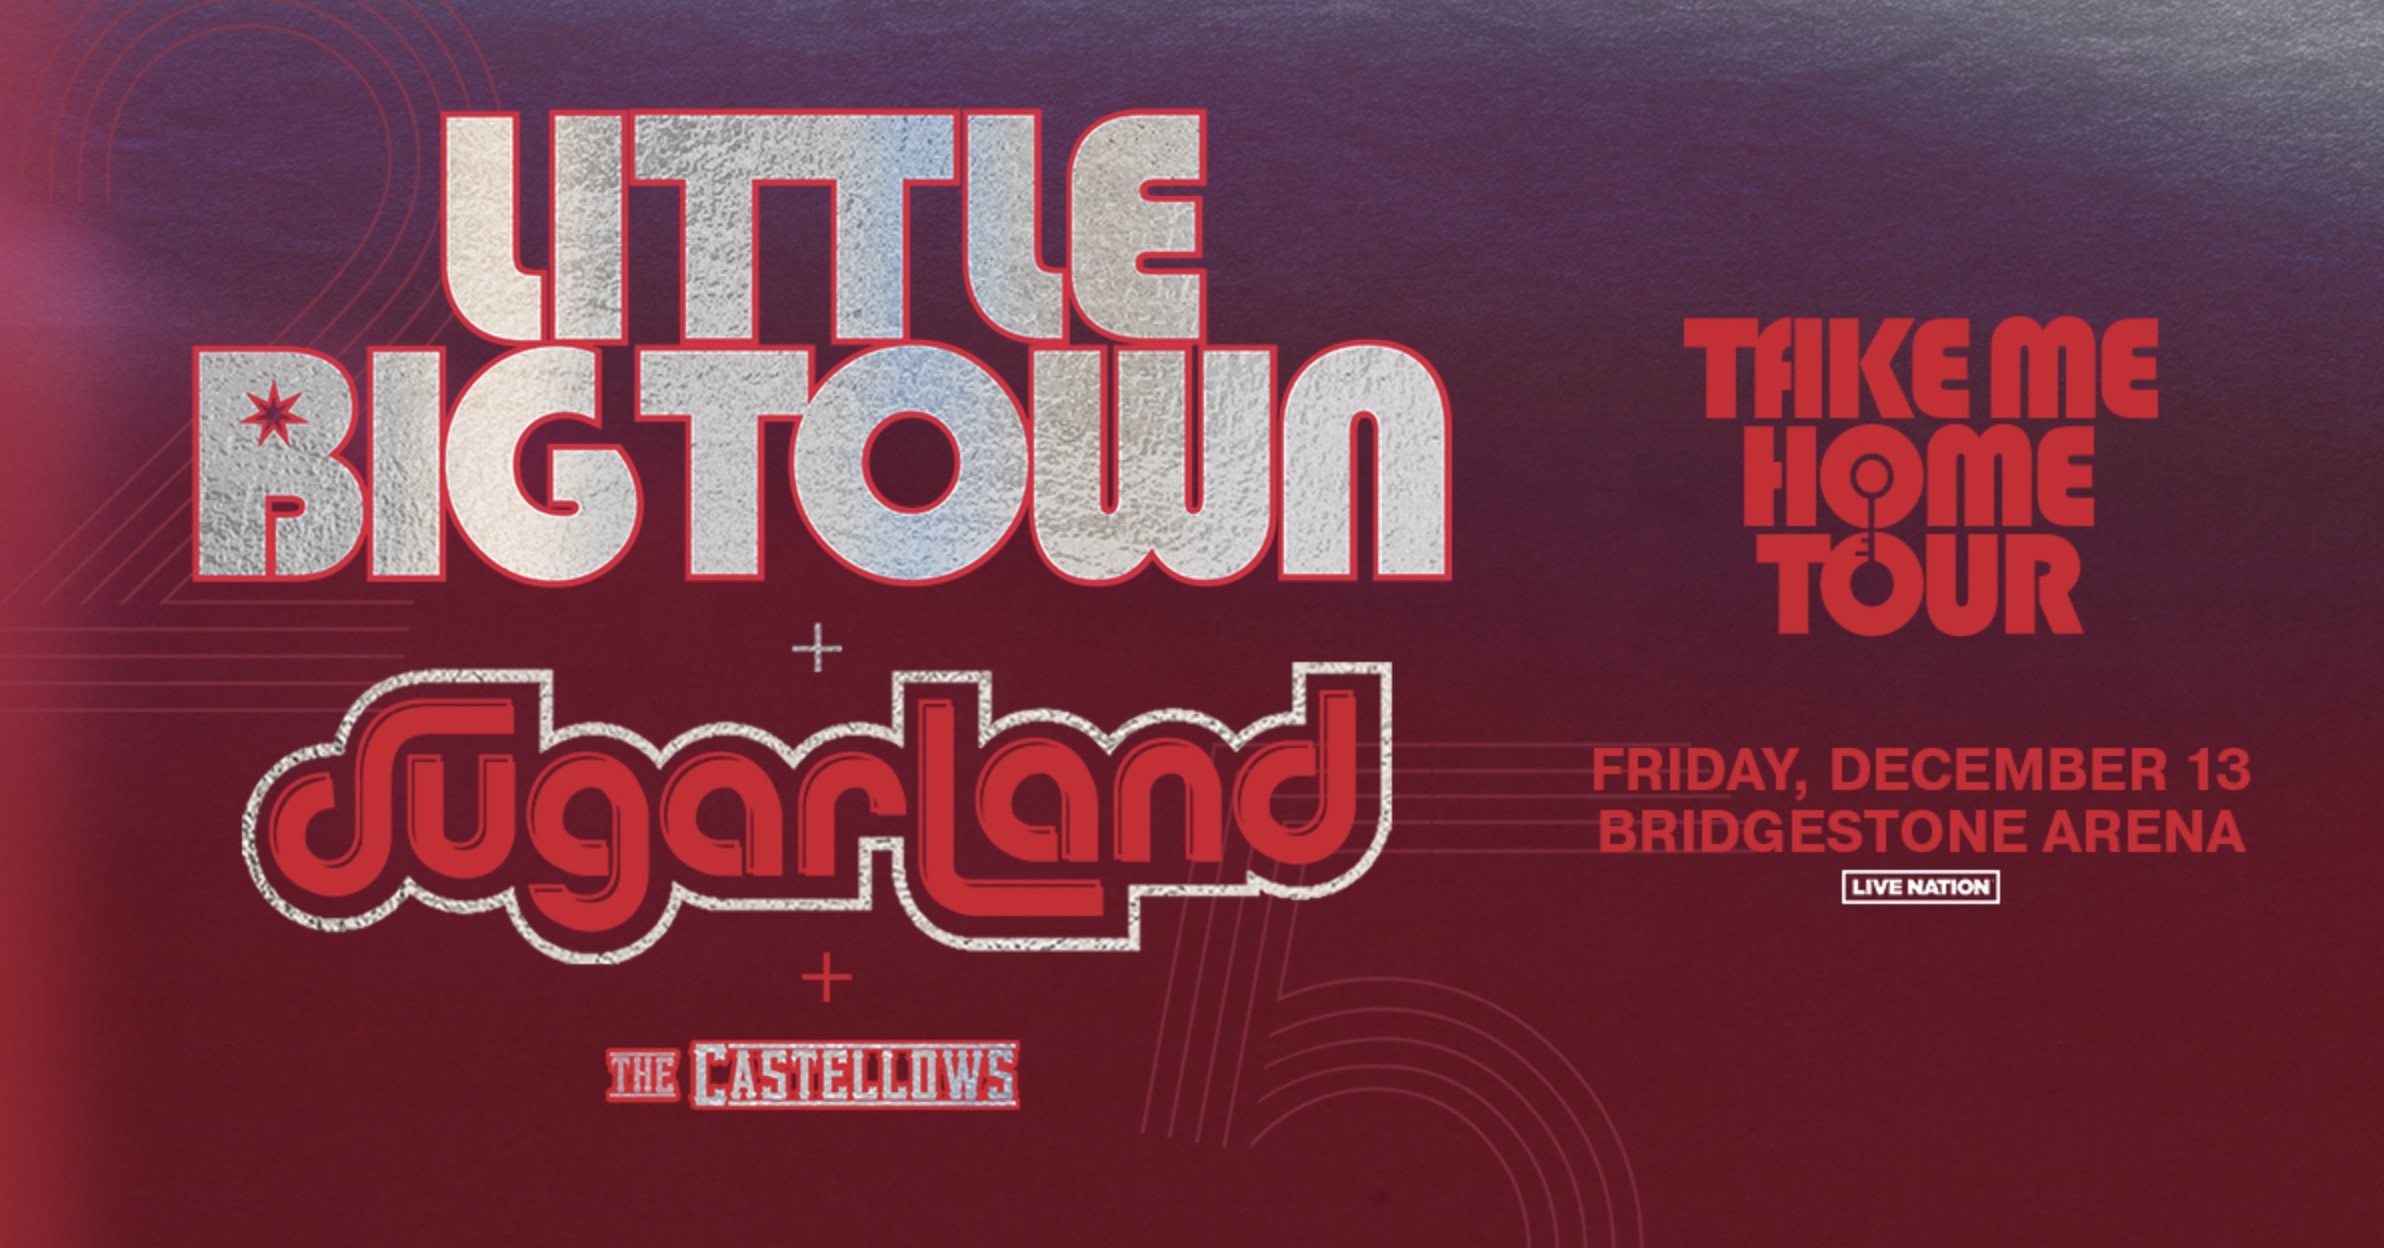 Little Big Town + Sugarland | Take Me Home Tour